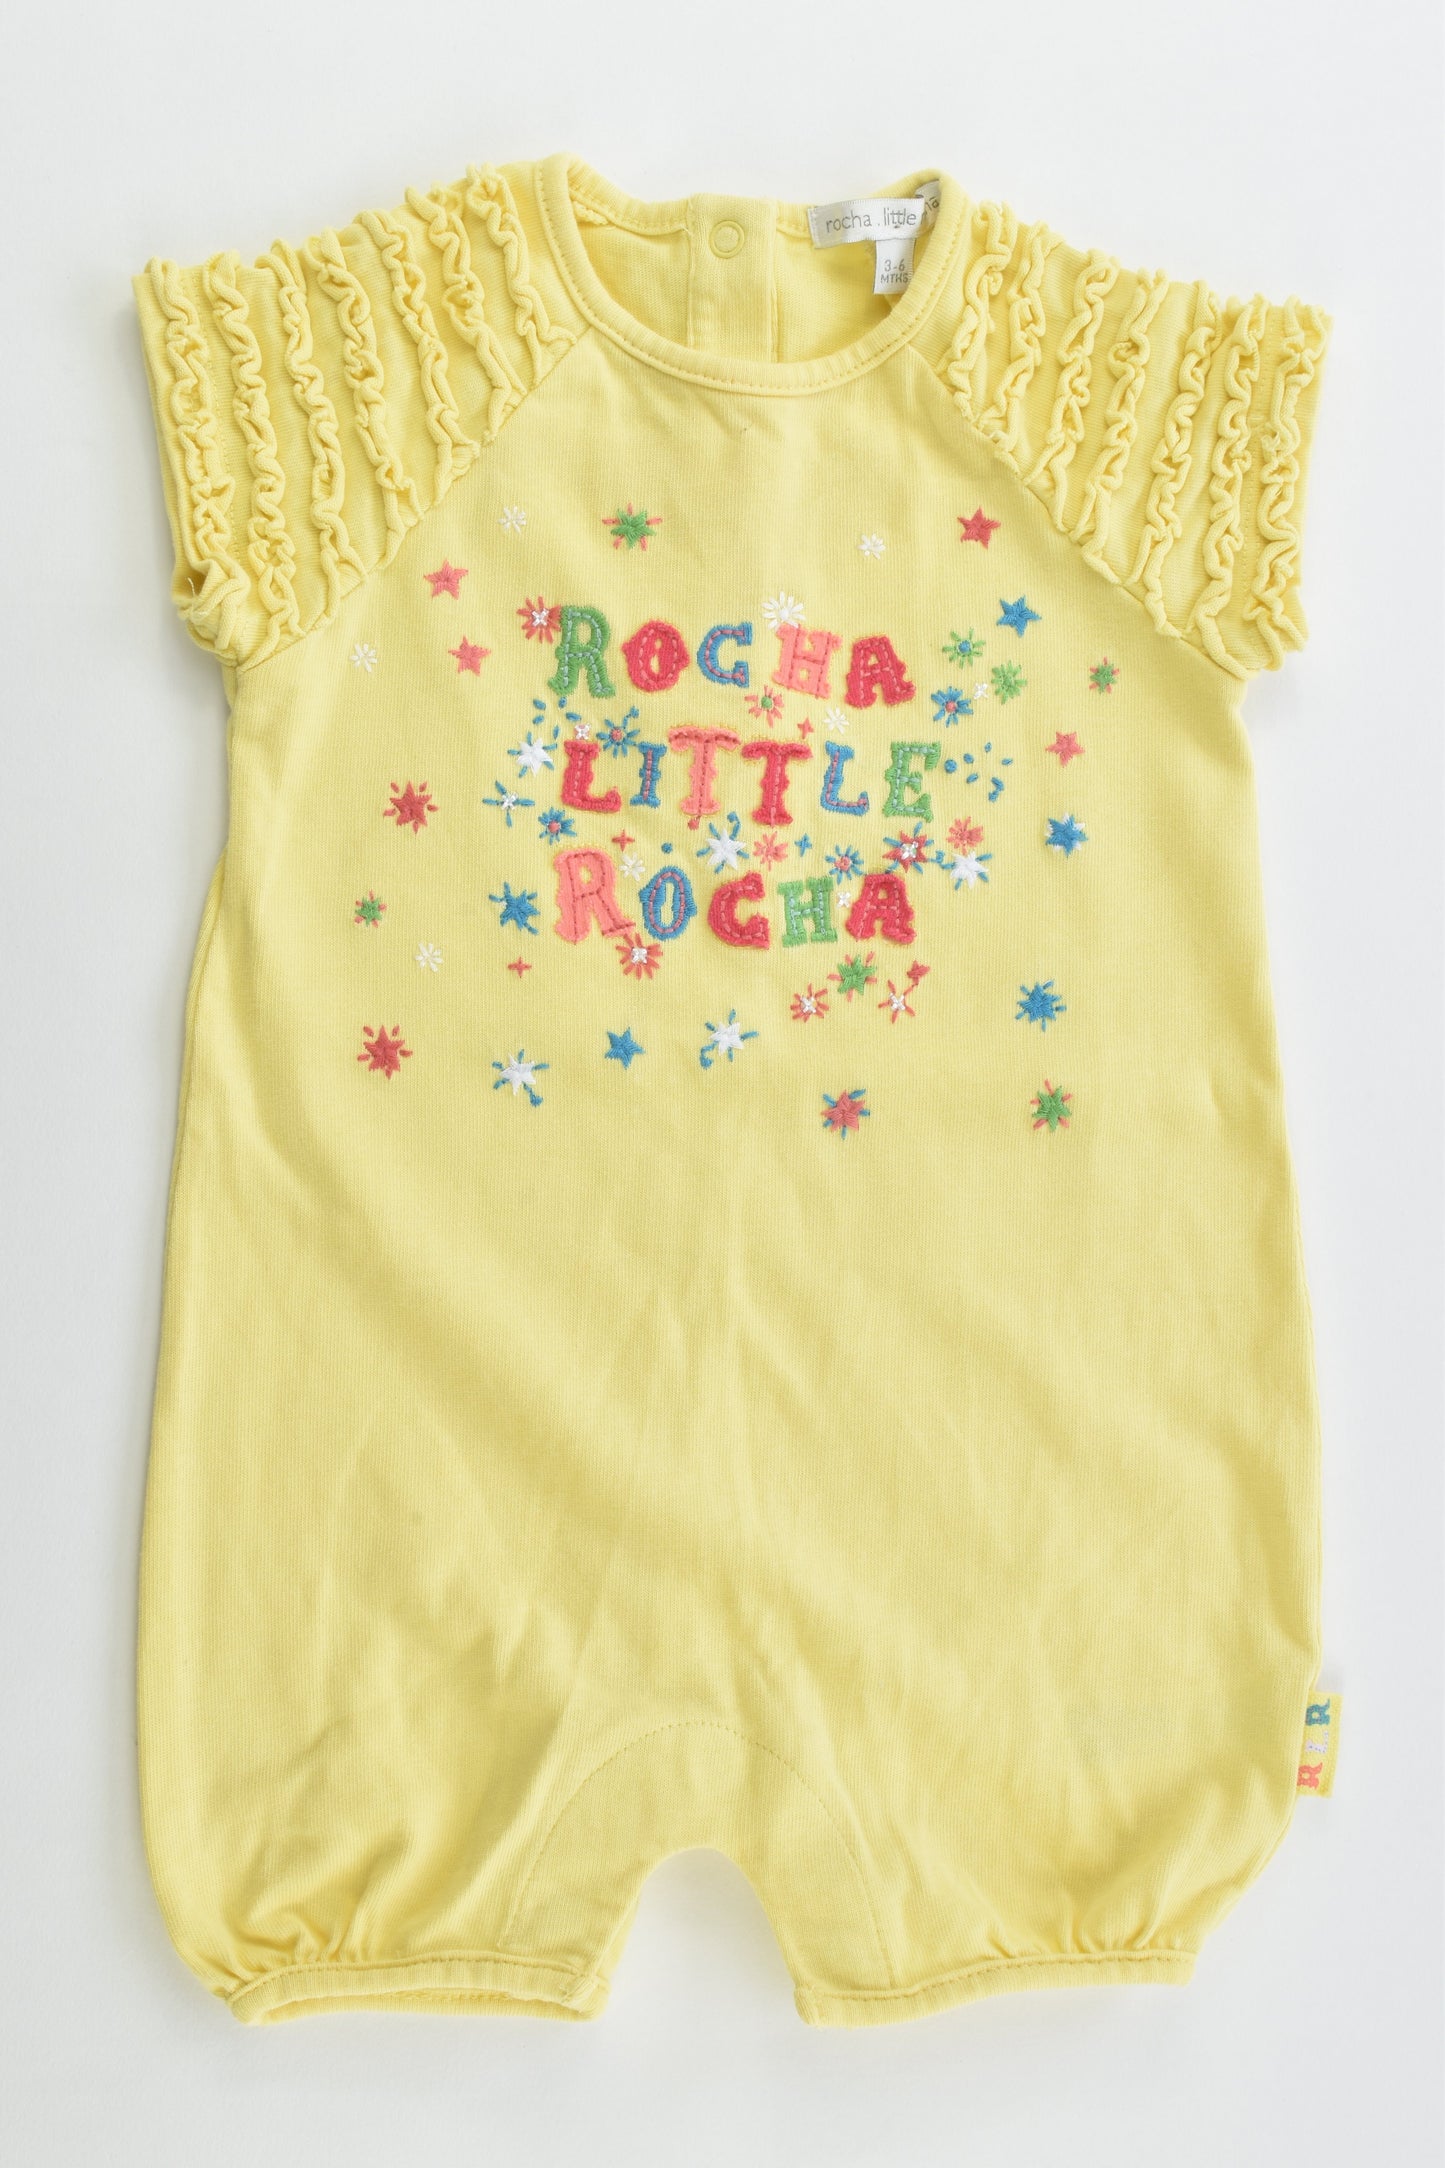 Rocha Little Rocha Size 00 (3-6 months, 68 cm) Short Romper